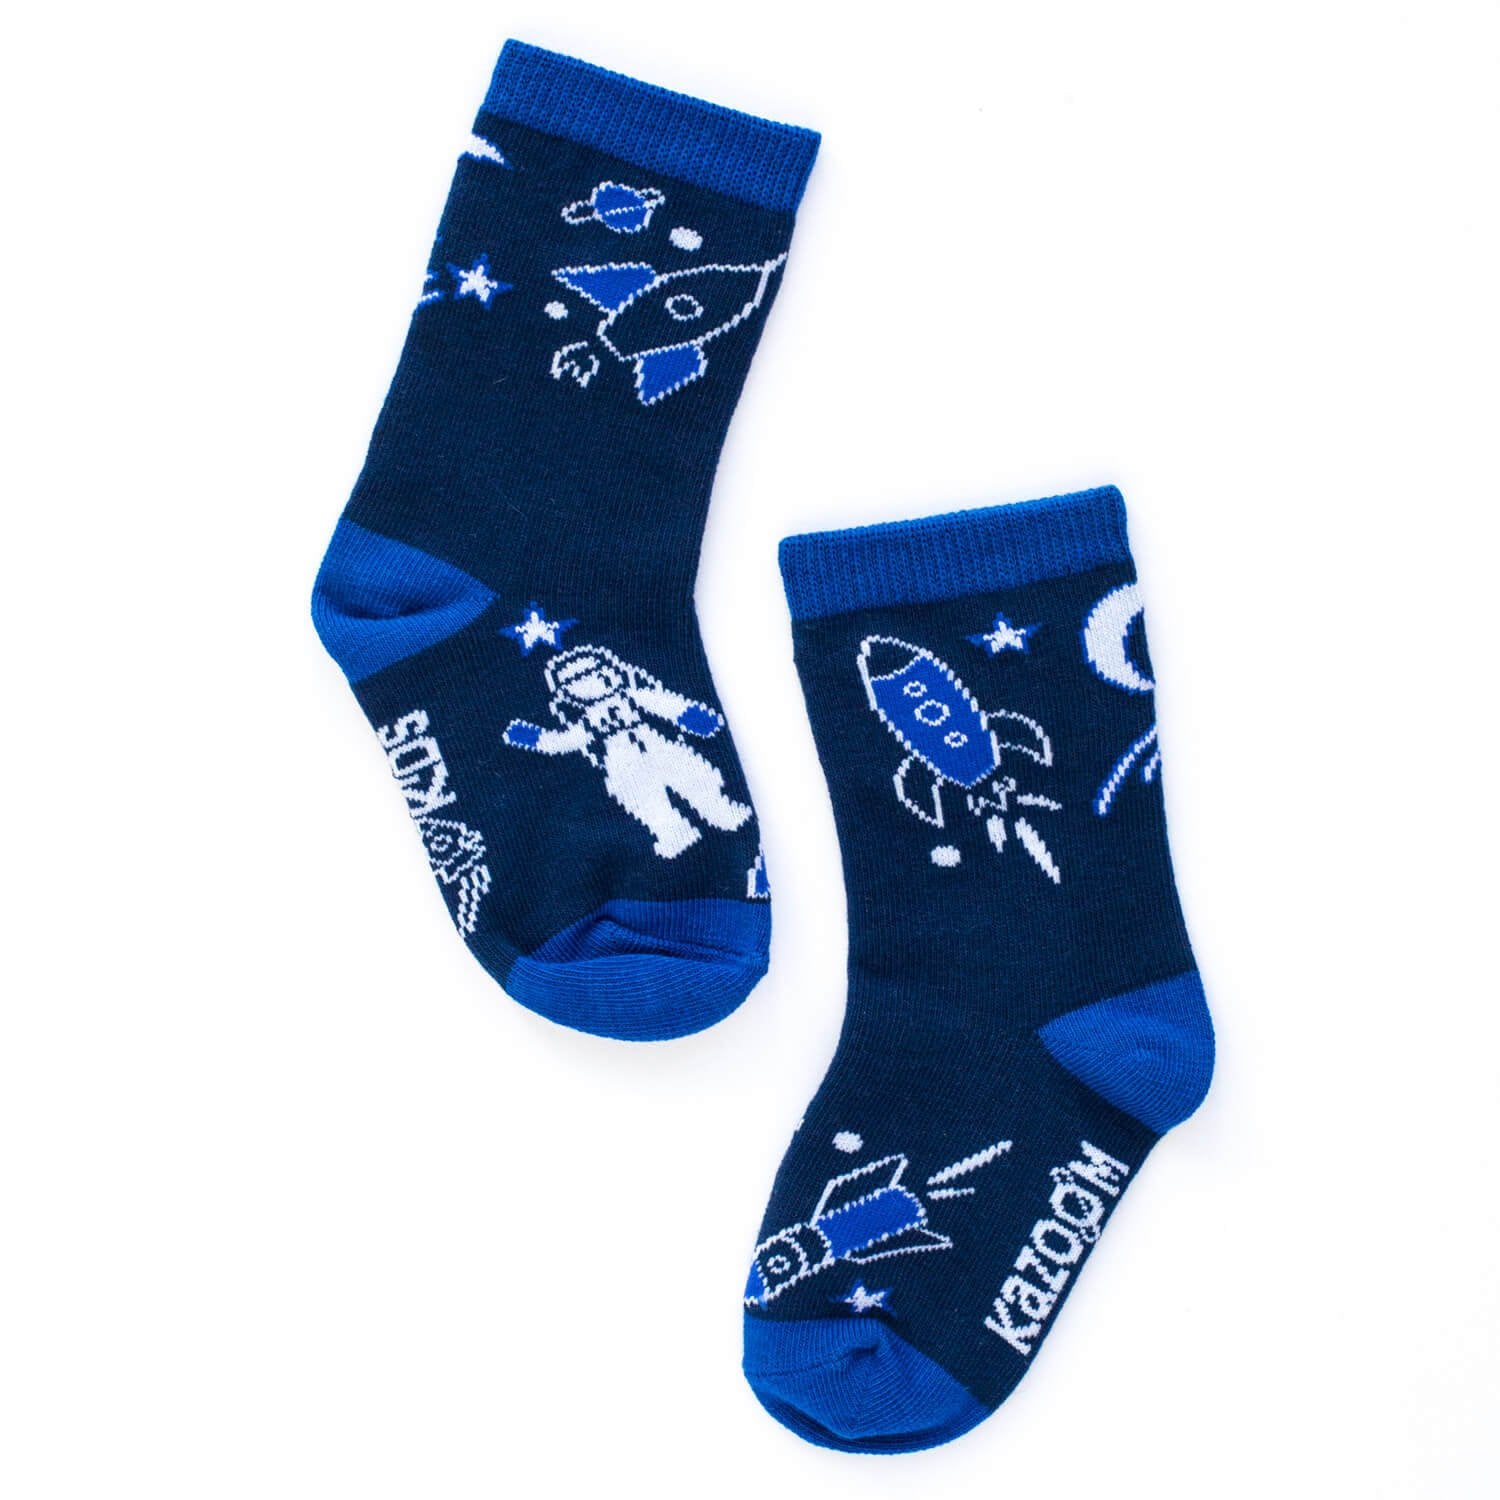 Kids Socks - Blue and Black Rocket Socks